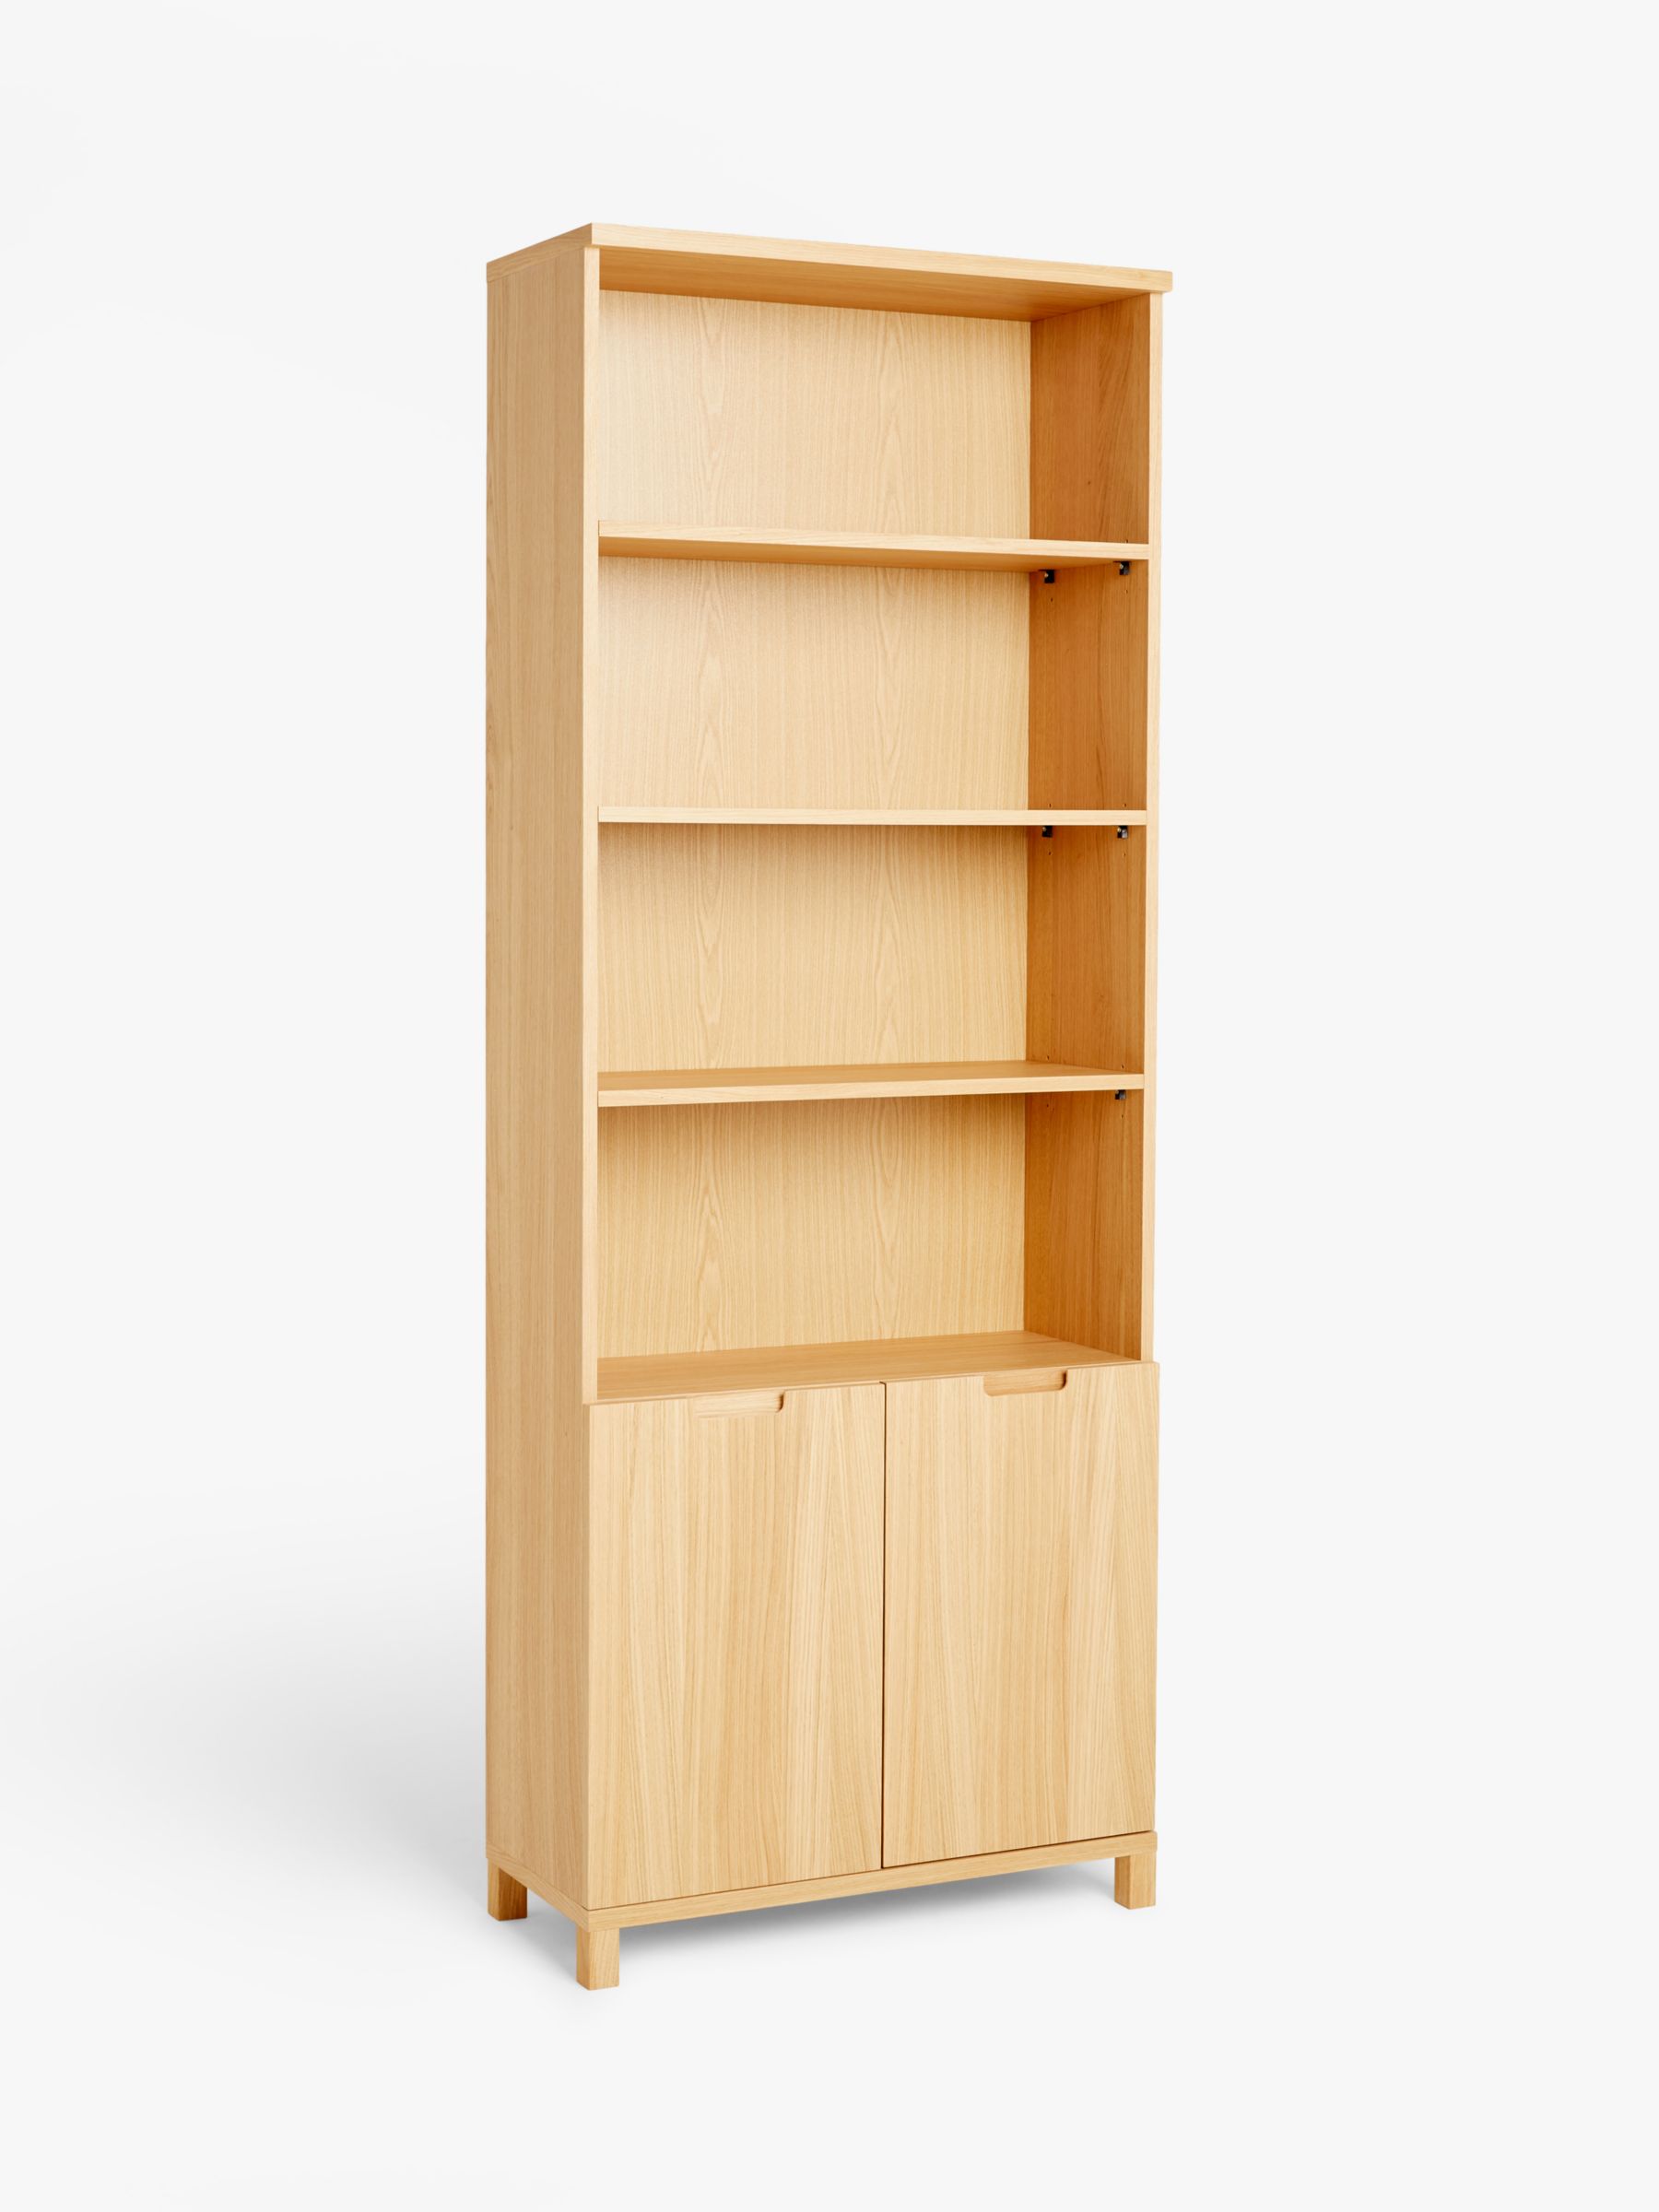 Photo of John lewis abacus storage bookcase natural fsc certified -oak oak veneer-